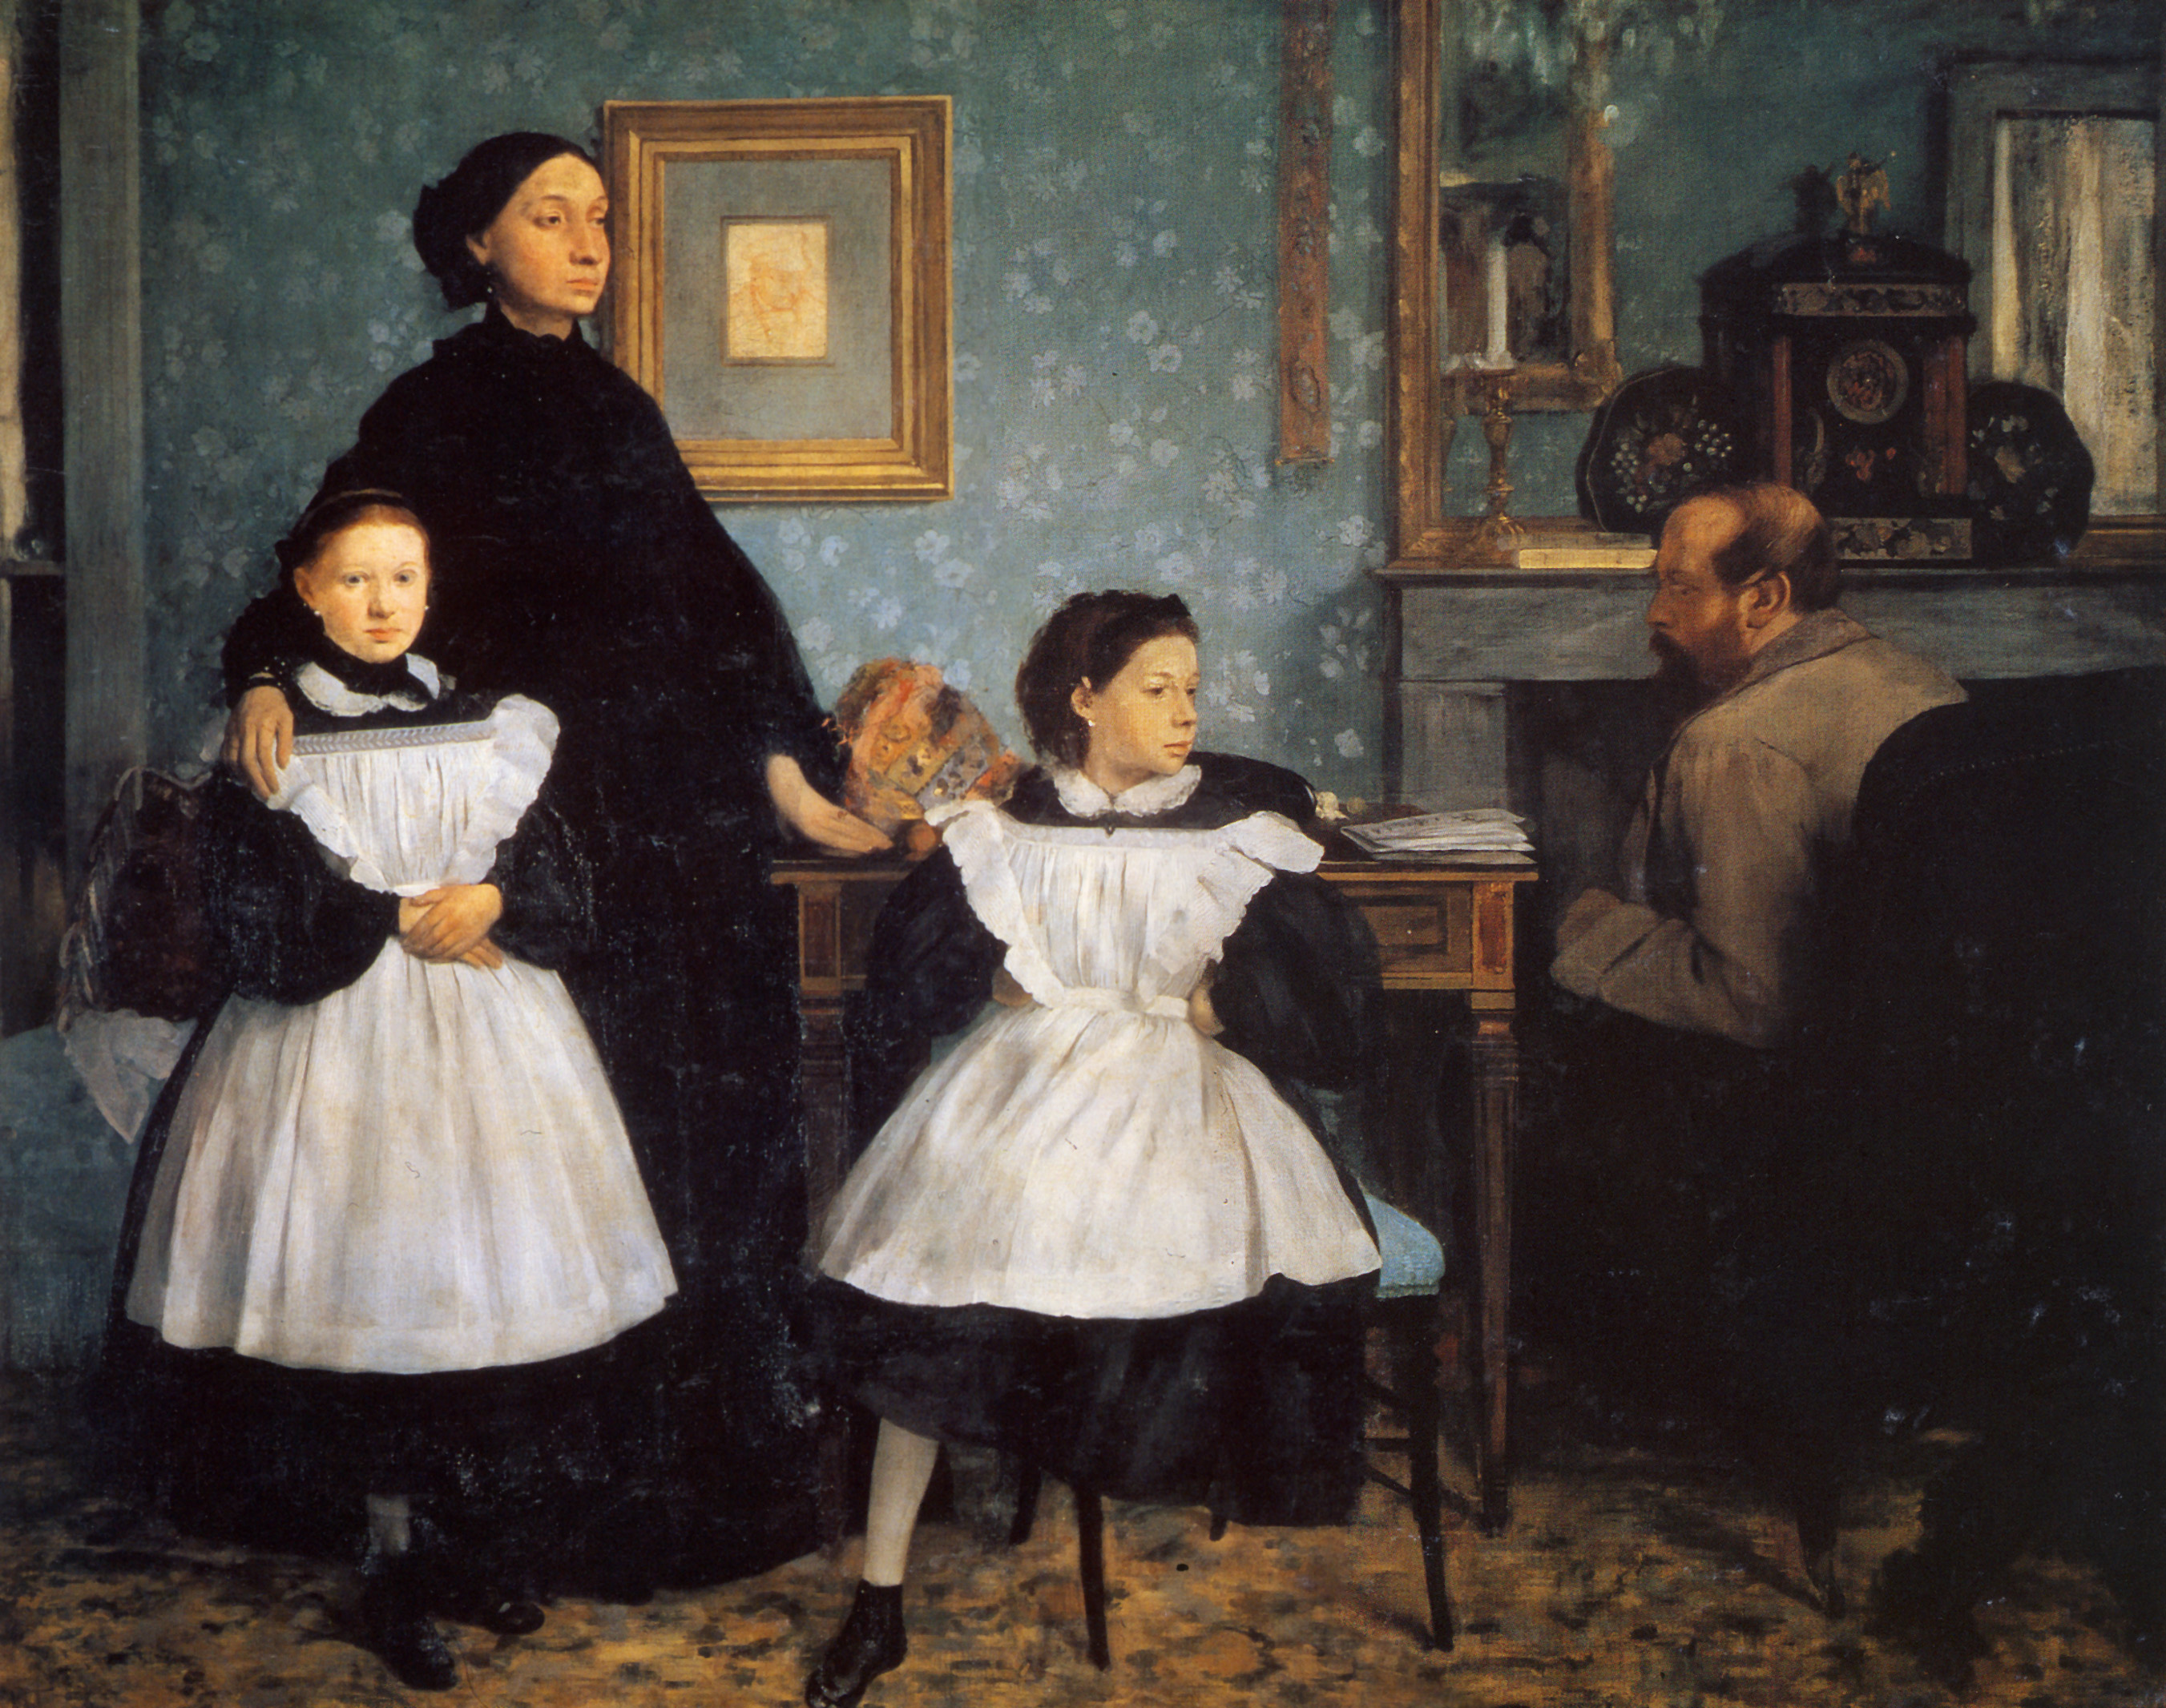 La famille Bellelli by Edgar Degas - 1860-1862 - 200 x 250 cm Musée d'Orsay